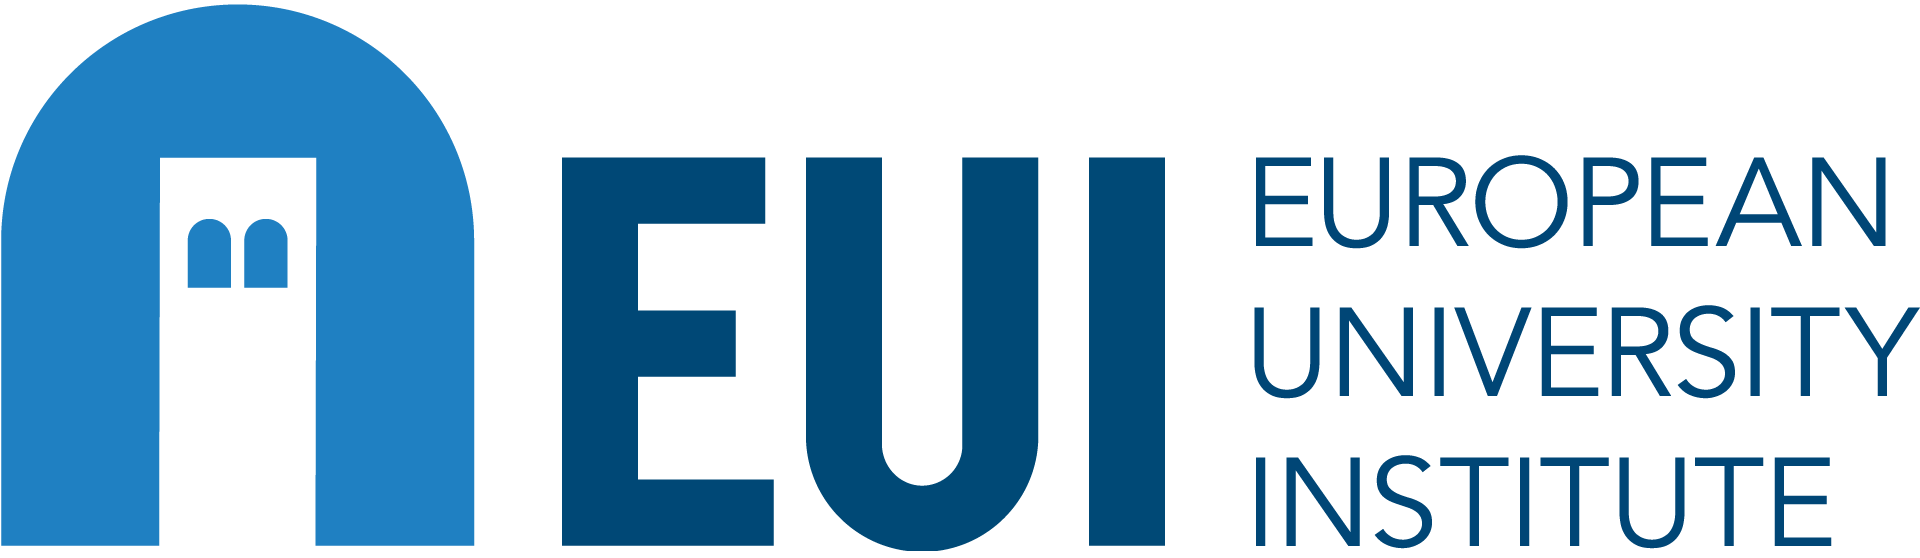 European University Institute logo